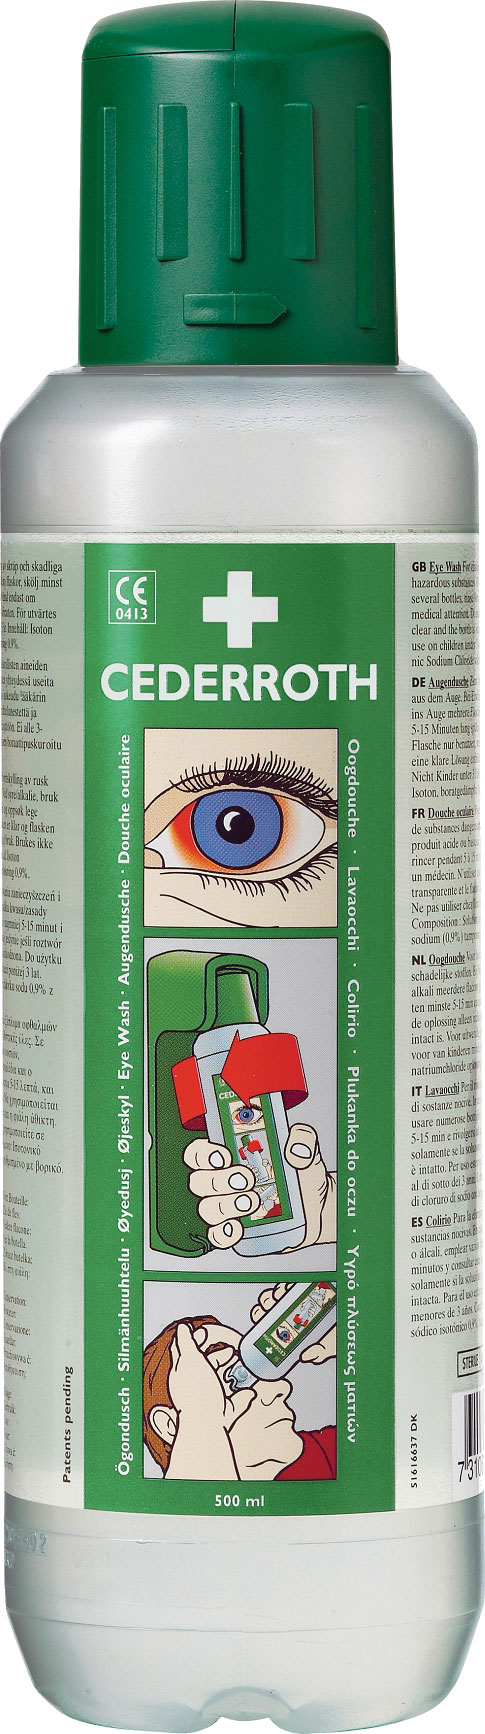 CEDERROTH 500ML EYEWASH BOTTLE - CM0727